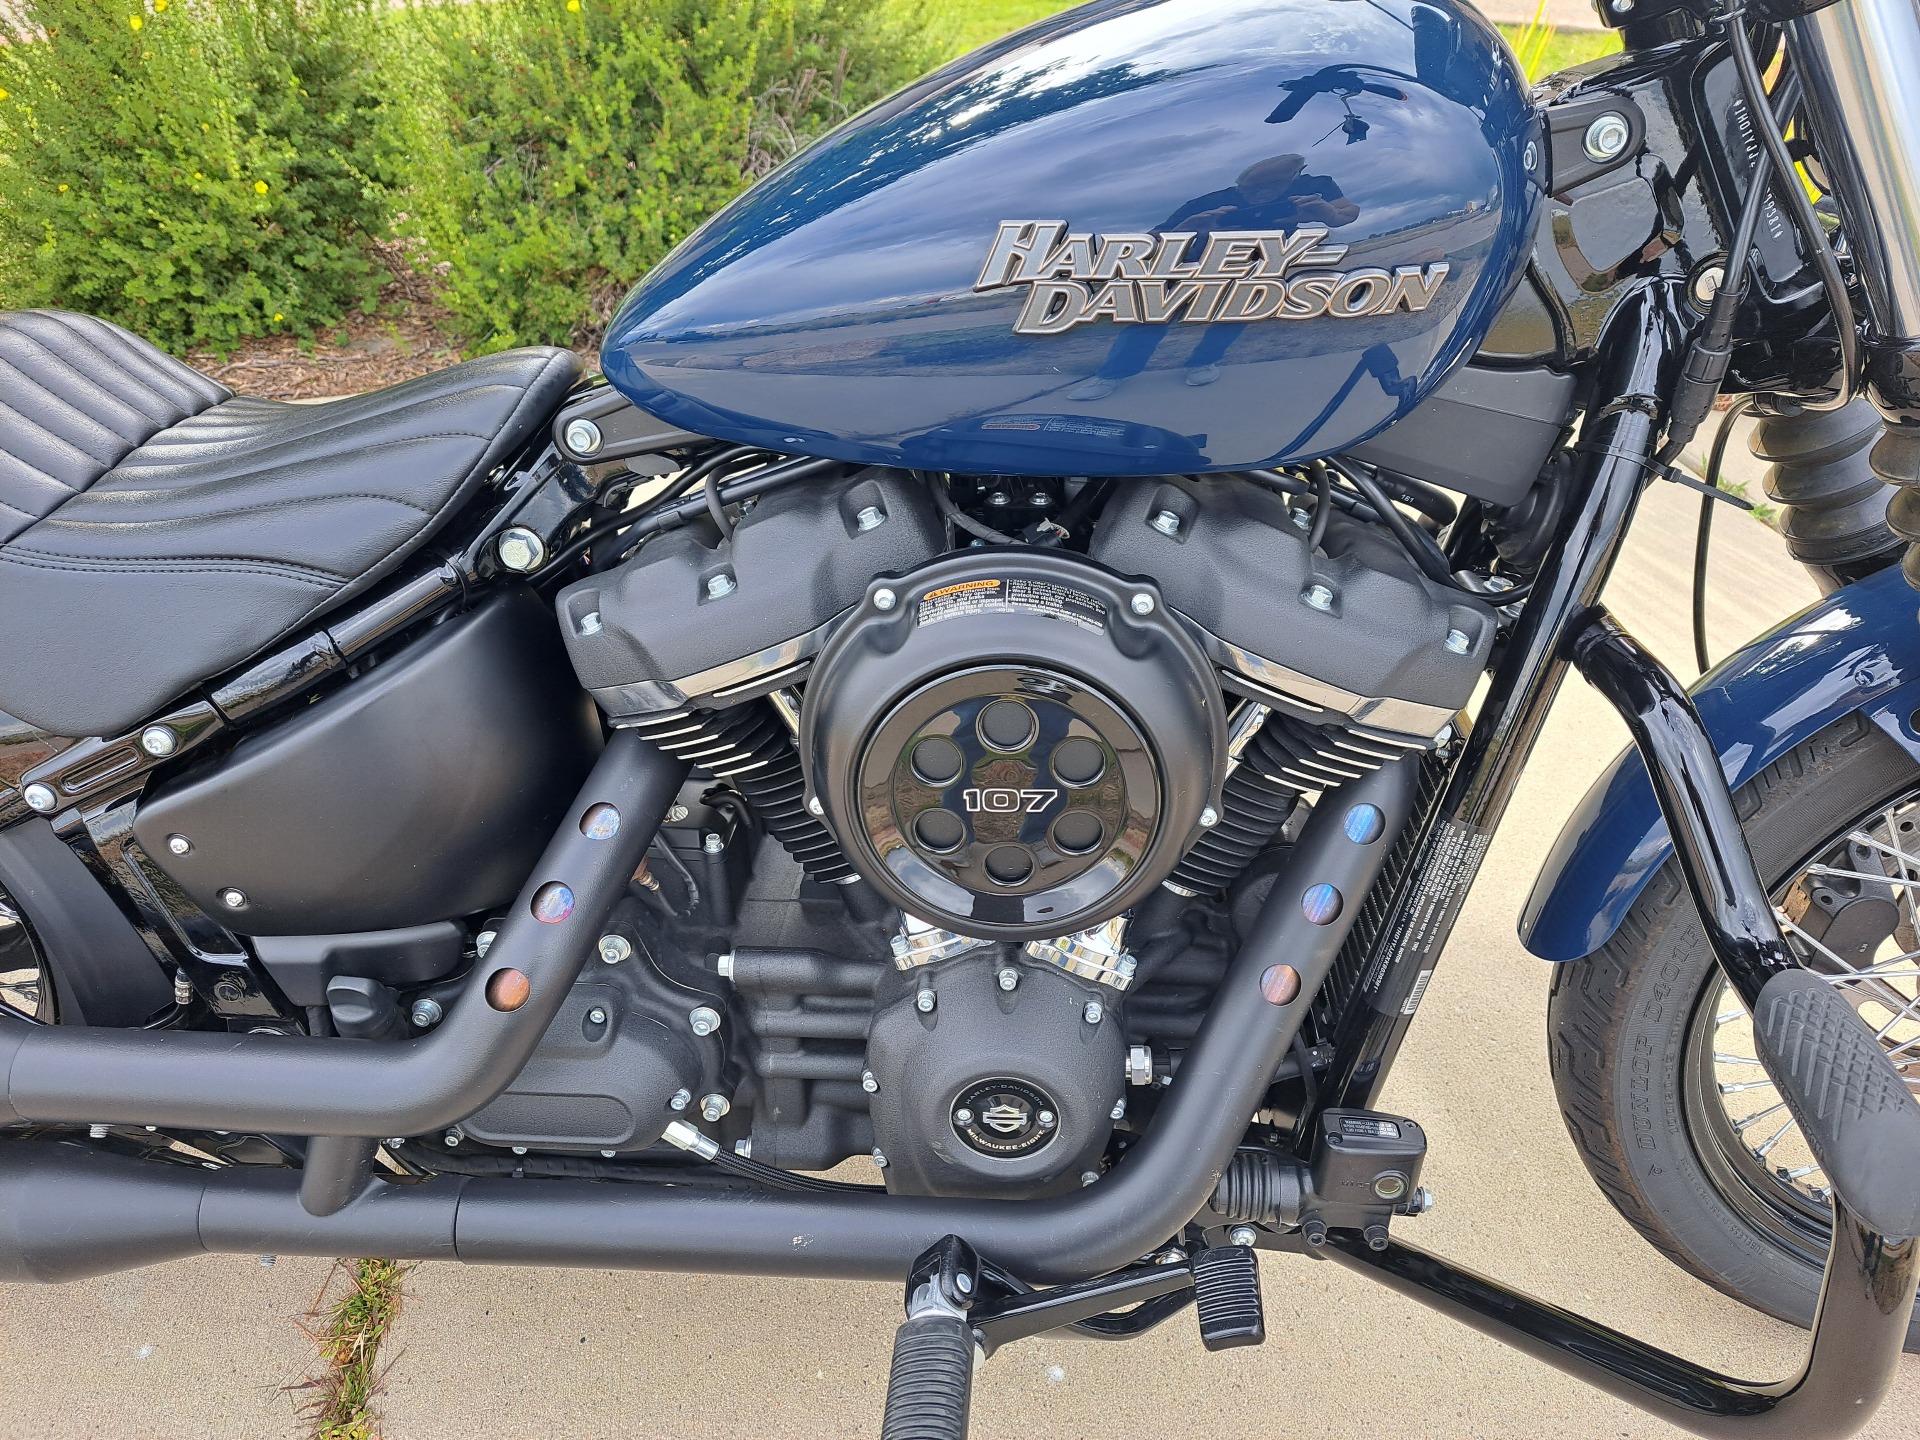 2019 Harley-Davidson Street Bob® in Loveland, Colorado - Photo 5